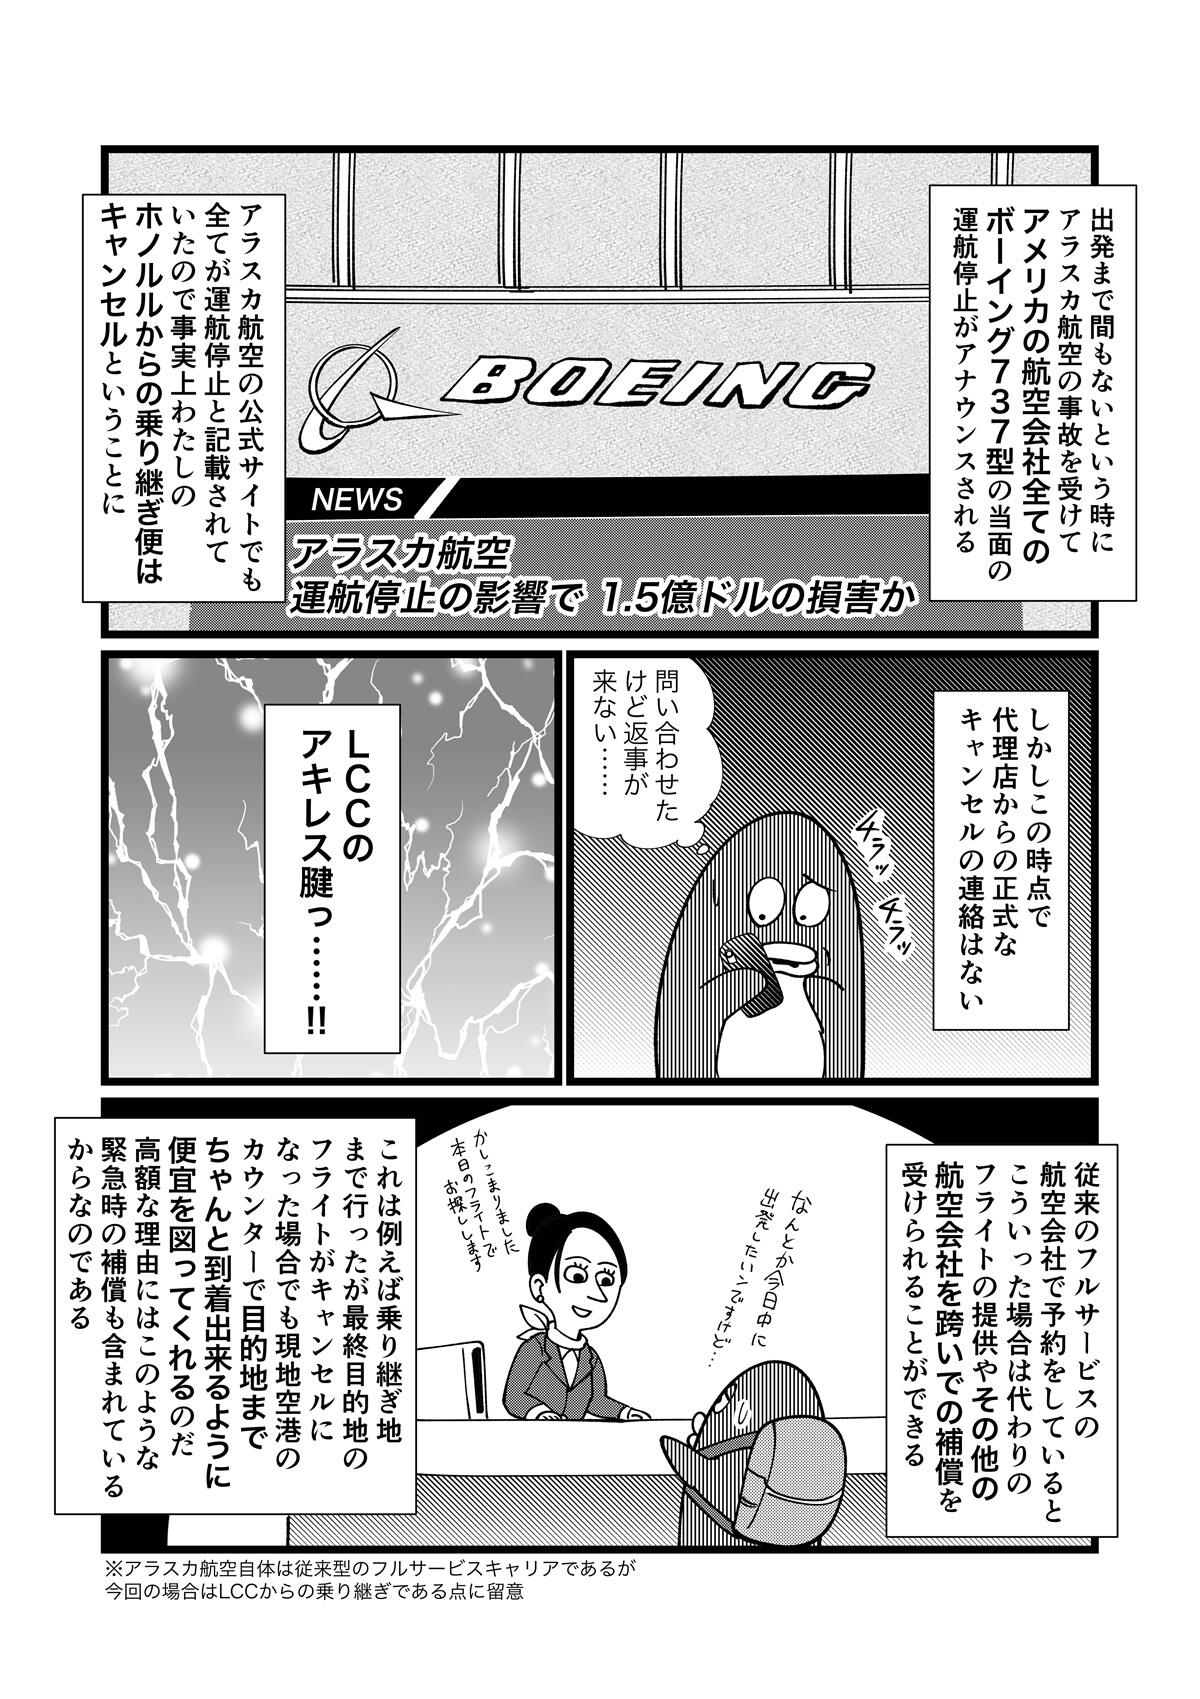 https://www.ryugaku.co.jp/column/images/jawamura27_3_1200.jpg